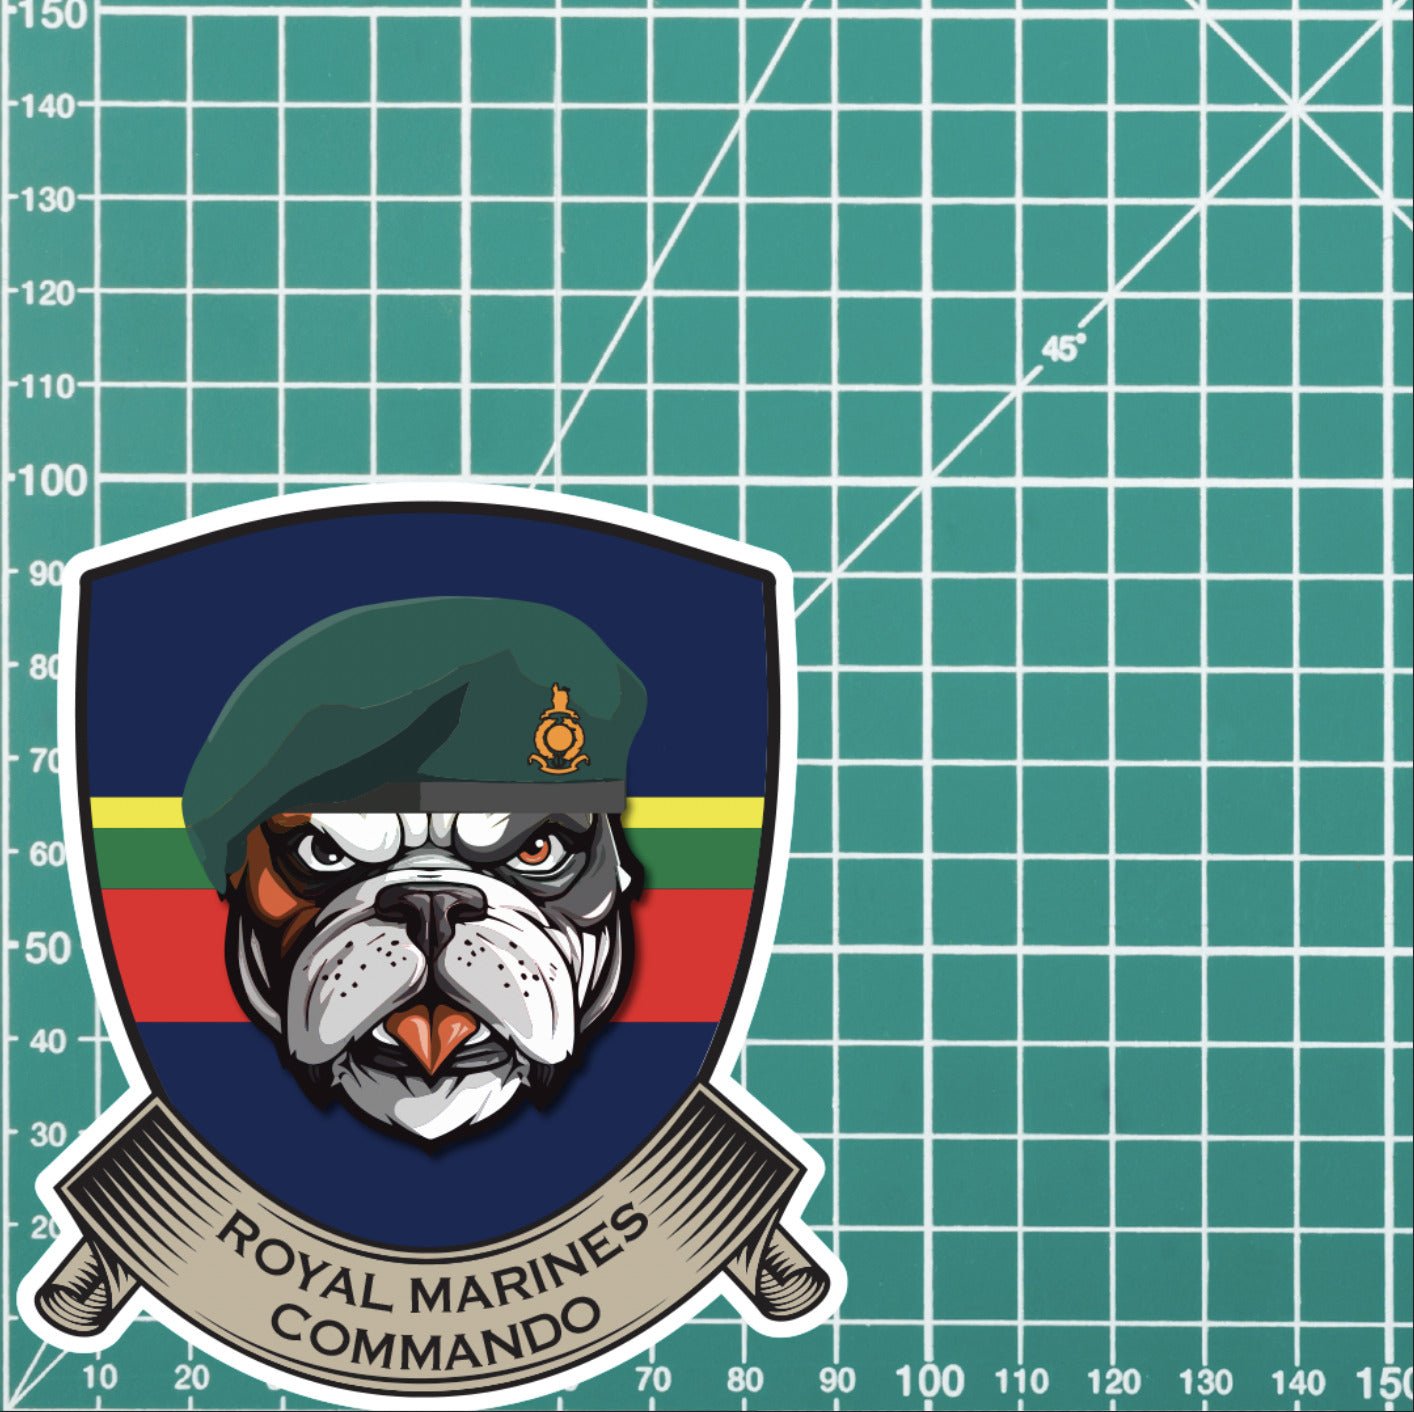 Royal Marines TRF British Bulldog Vinyl Sticker - 10cm redplume